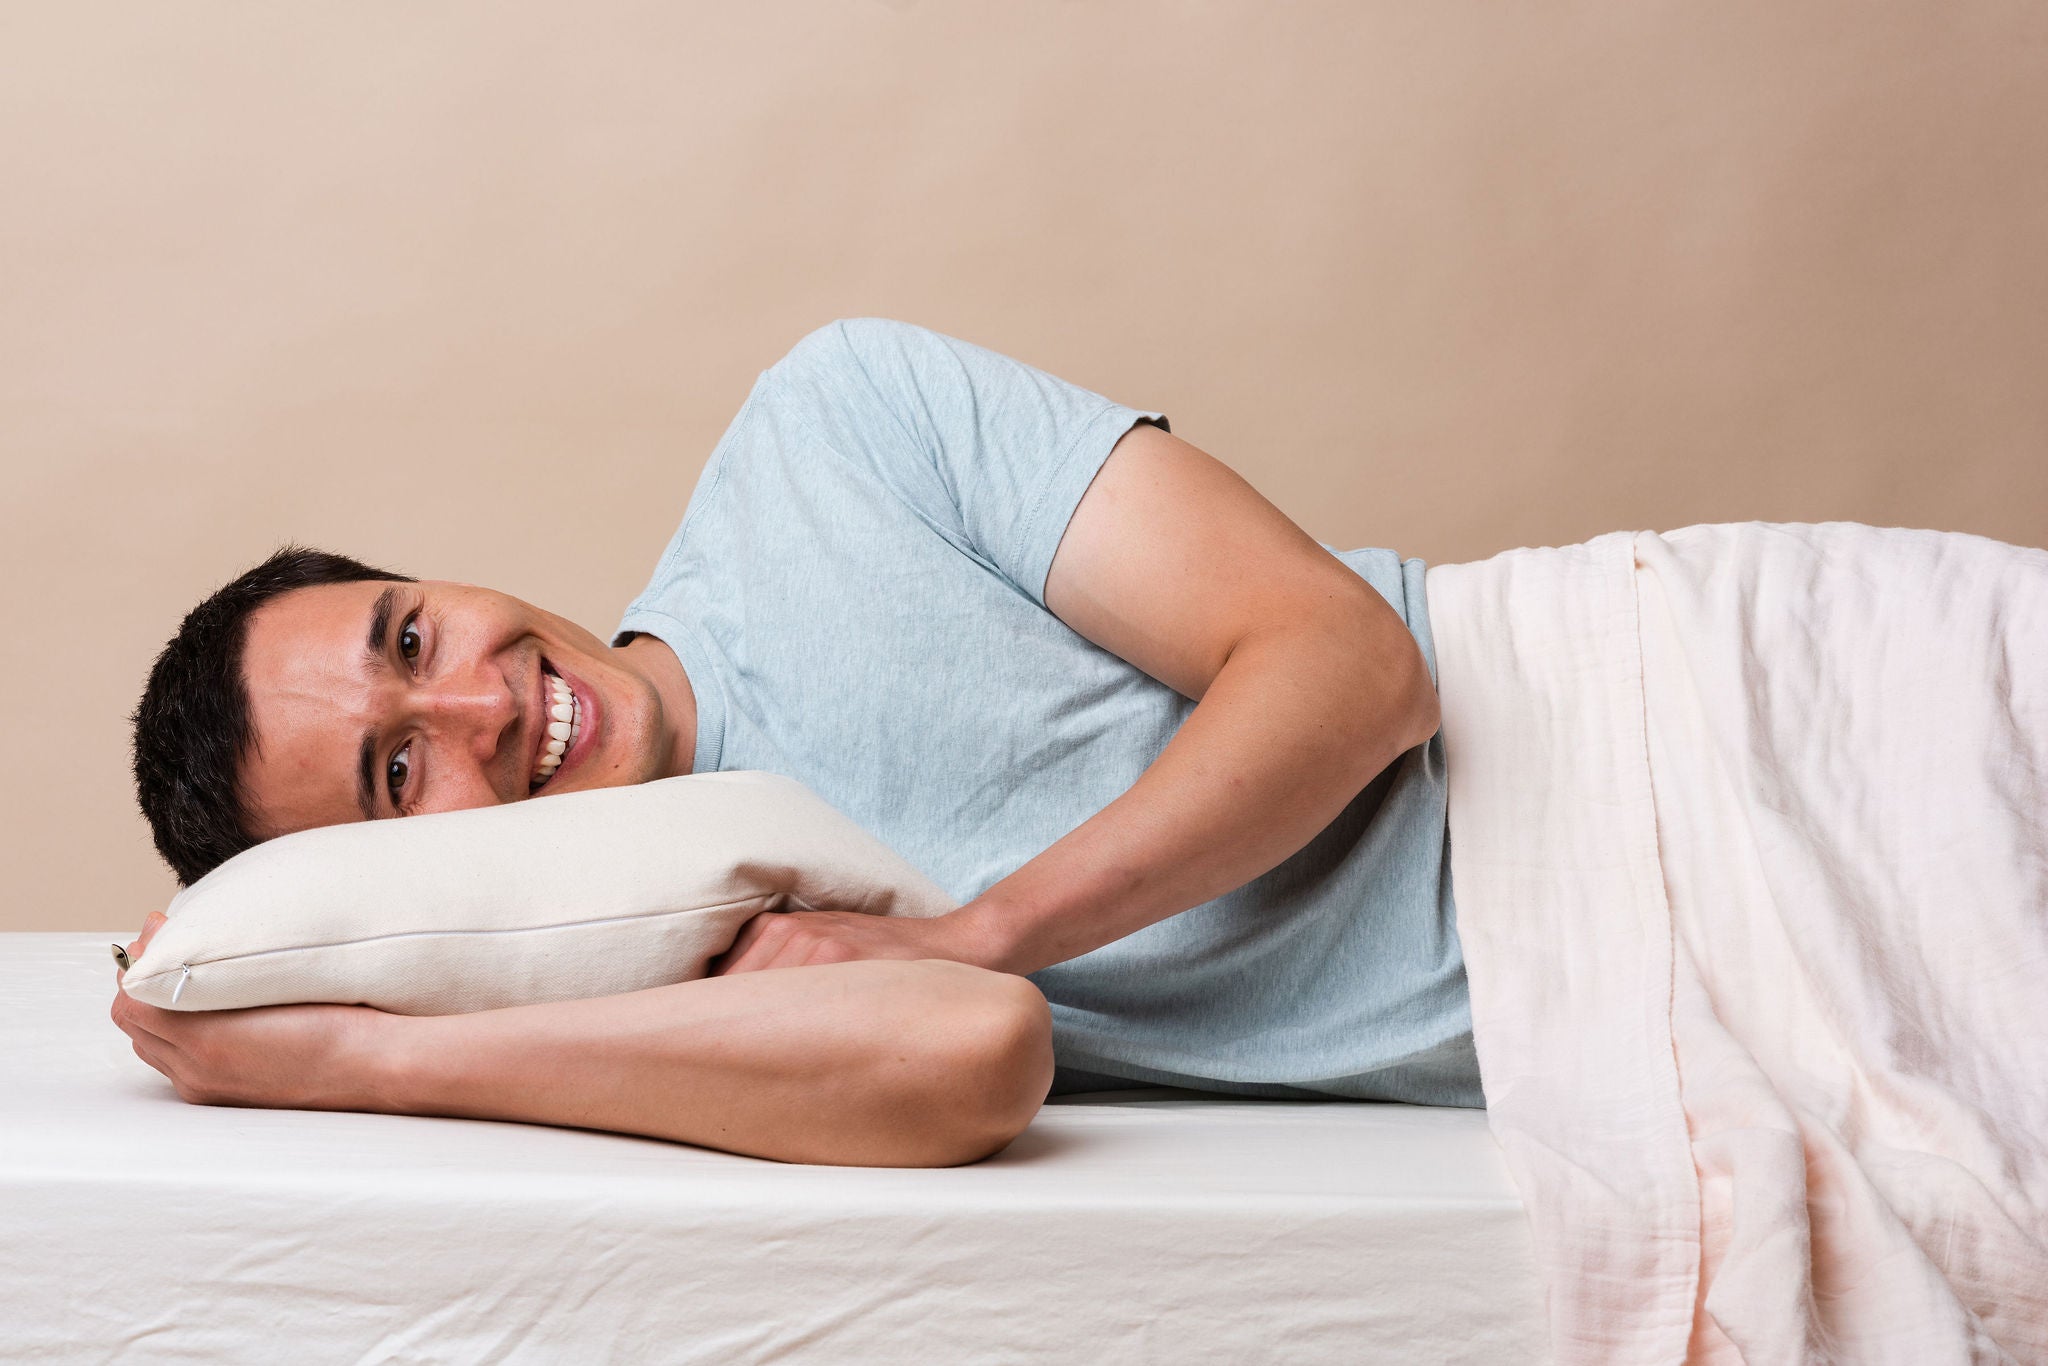 ComfySleep Buckwheat Hull Pillow - Made in the USA – ComfyComfy